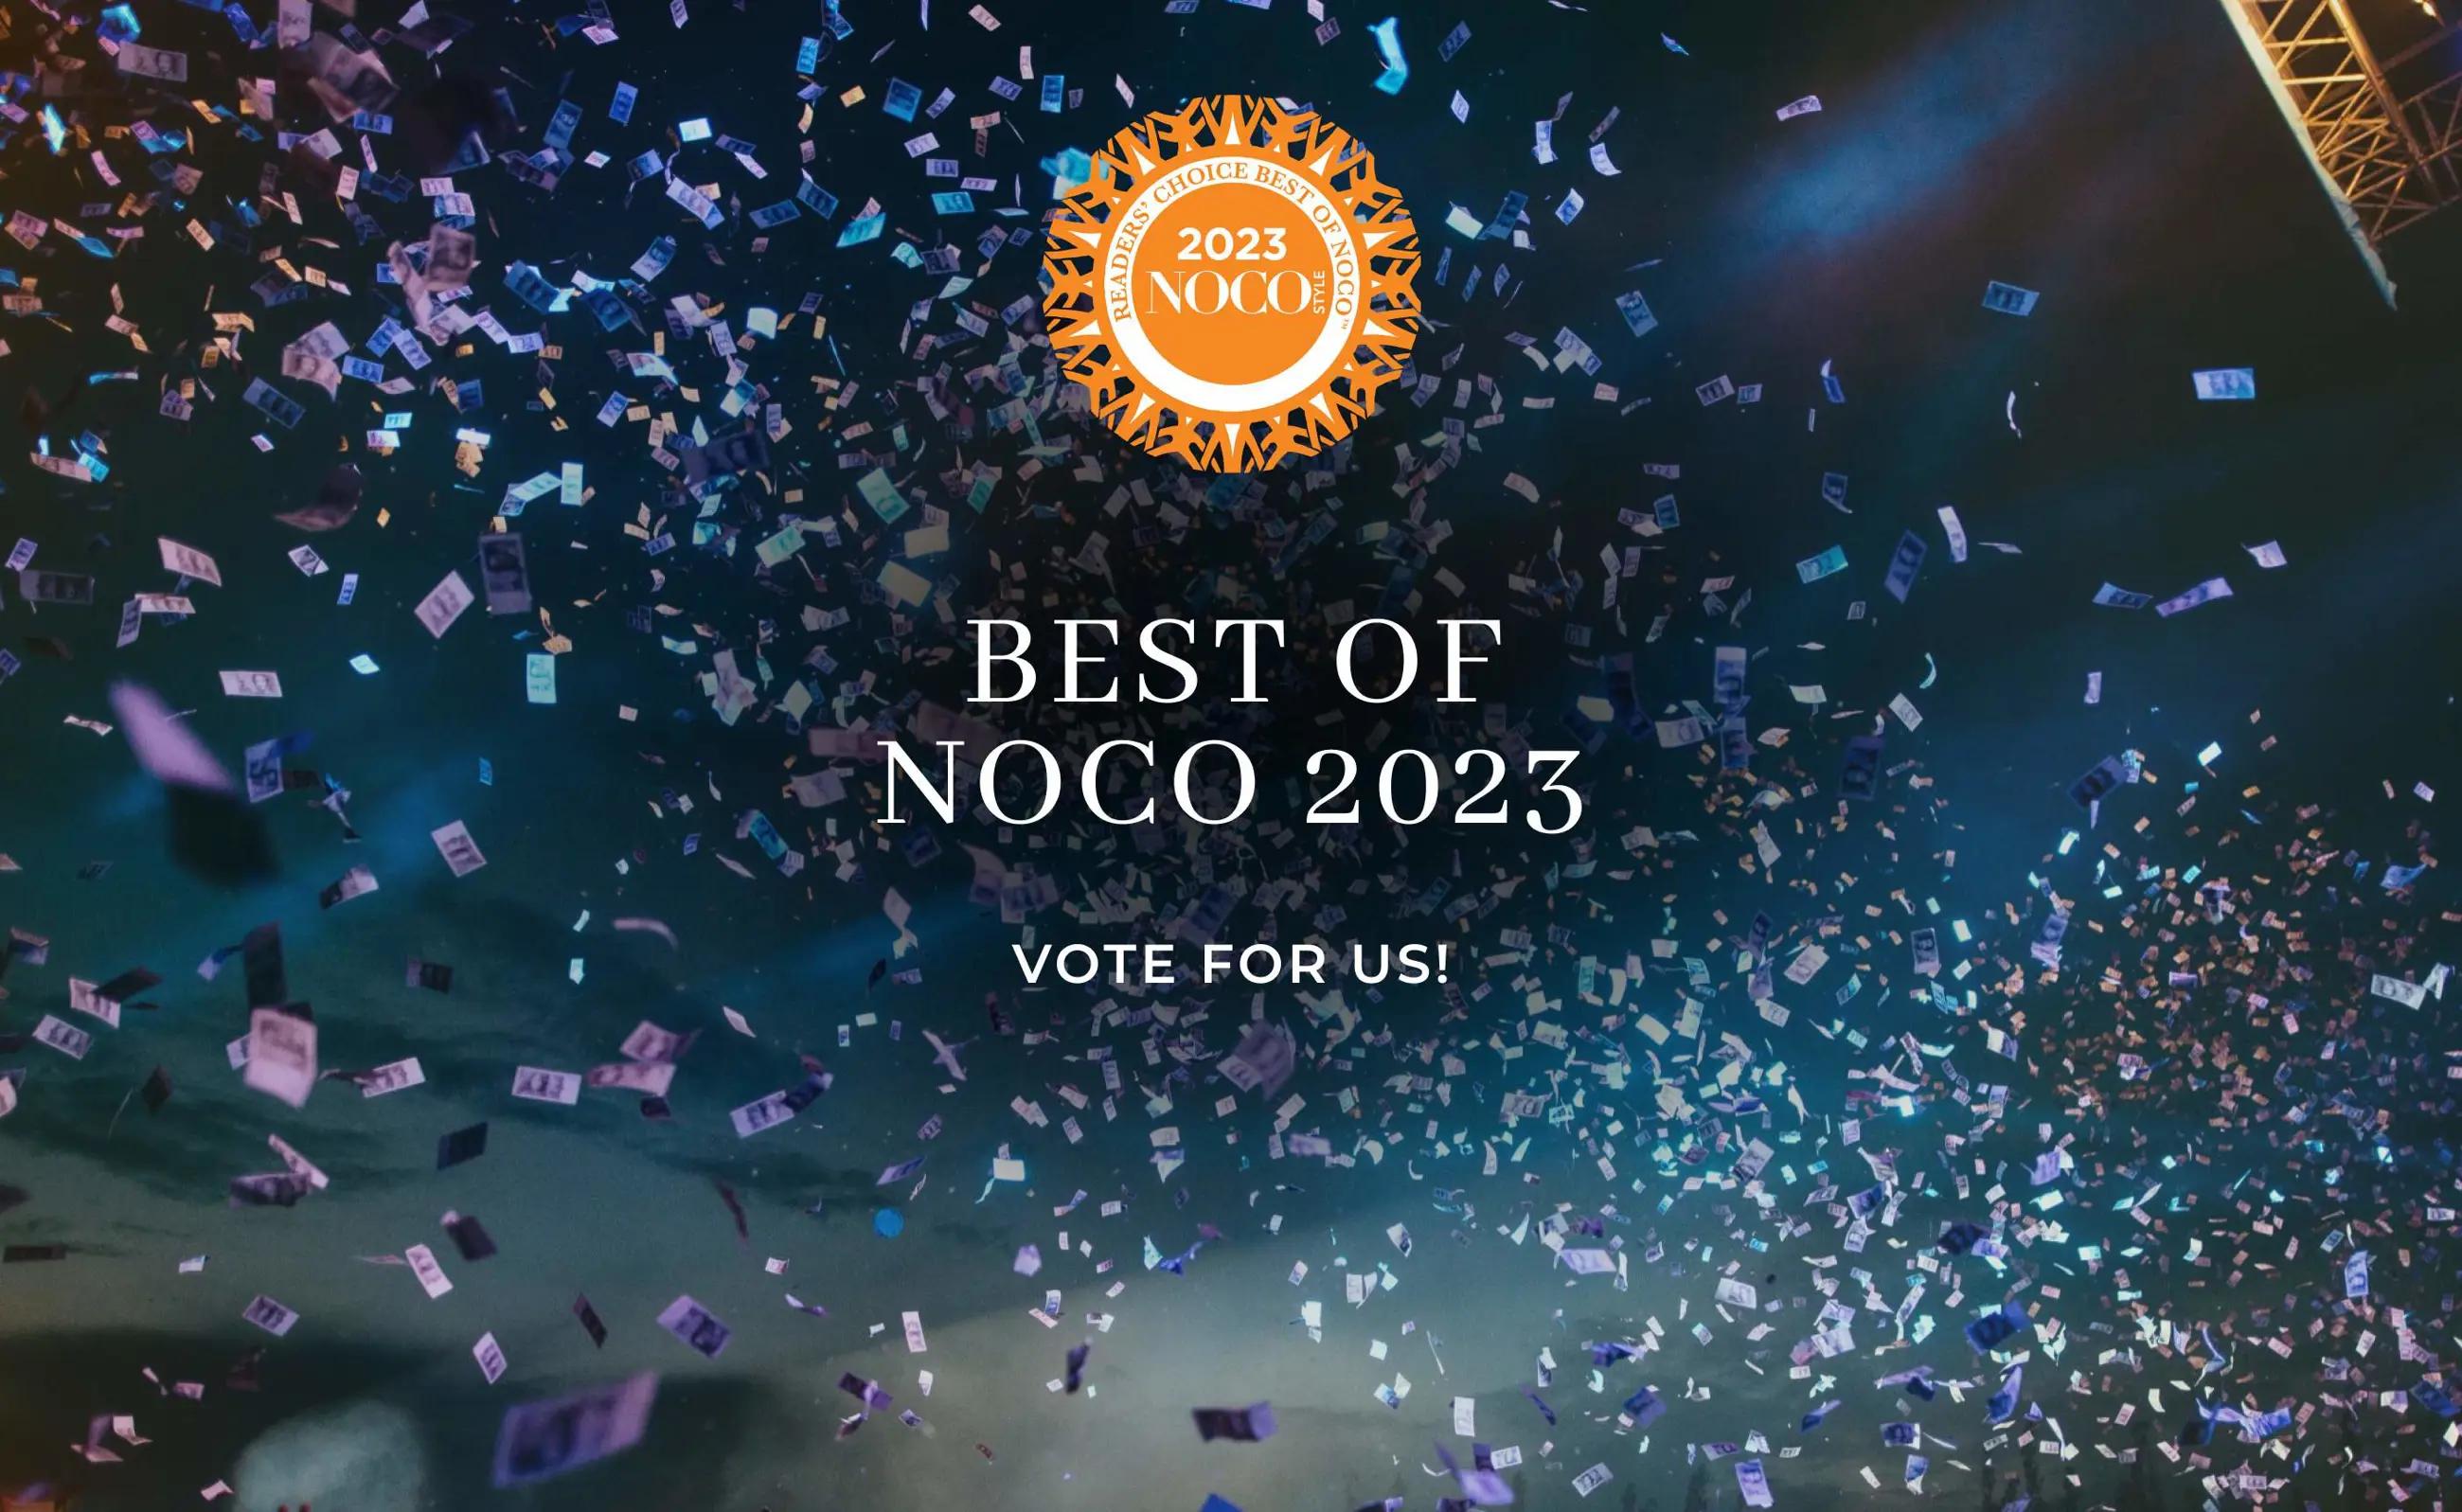 Best Of Noco 2023 banner